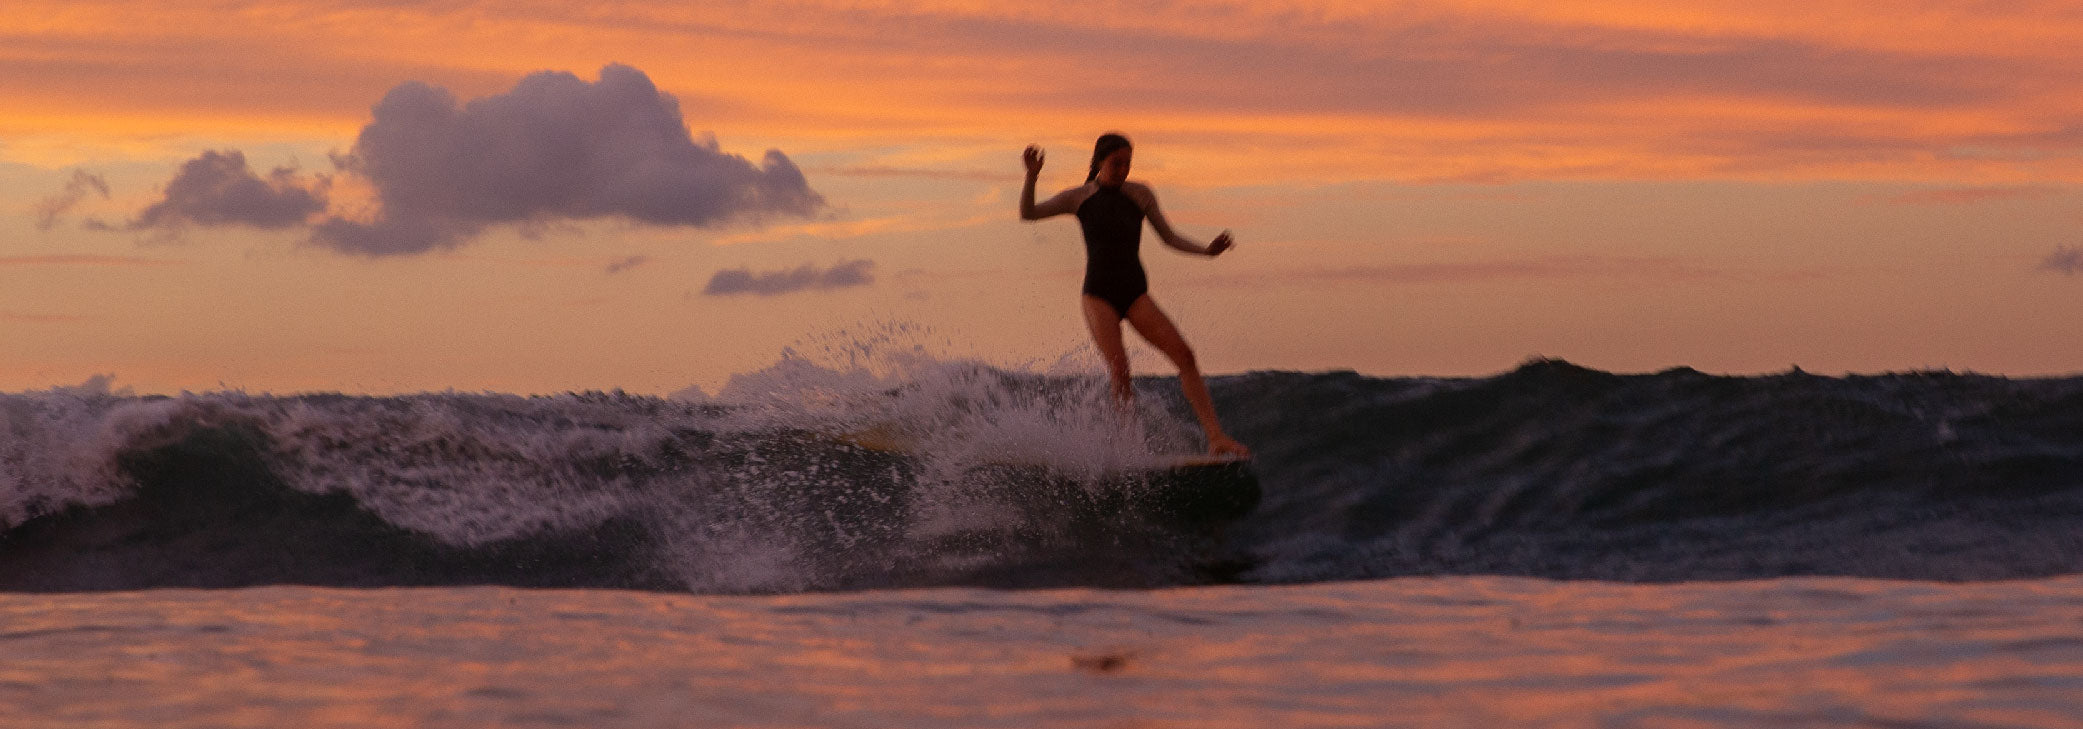 surf longboard Mexico sunset women surf suit black white